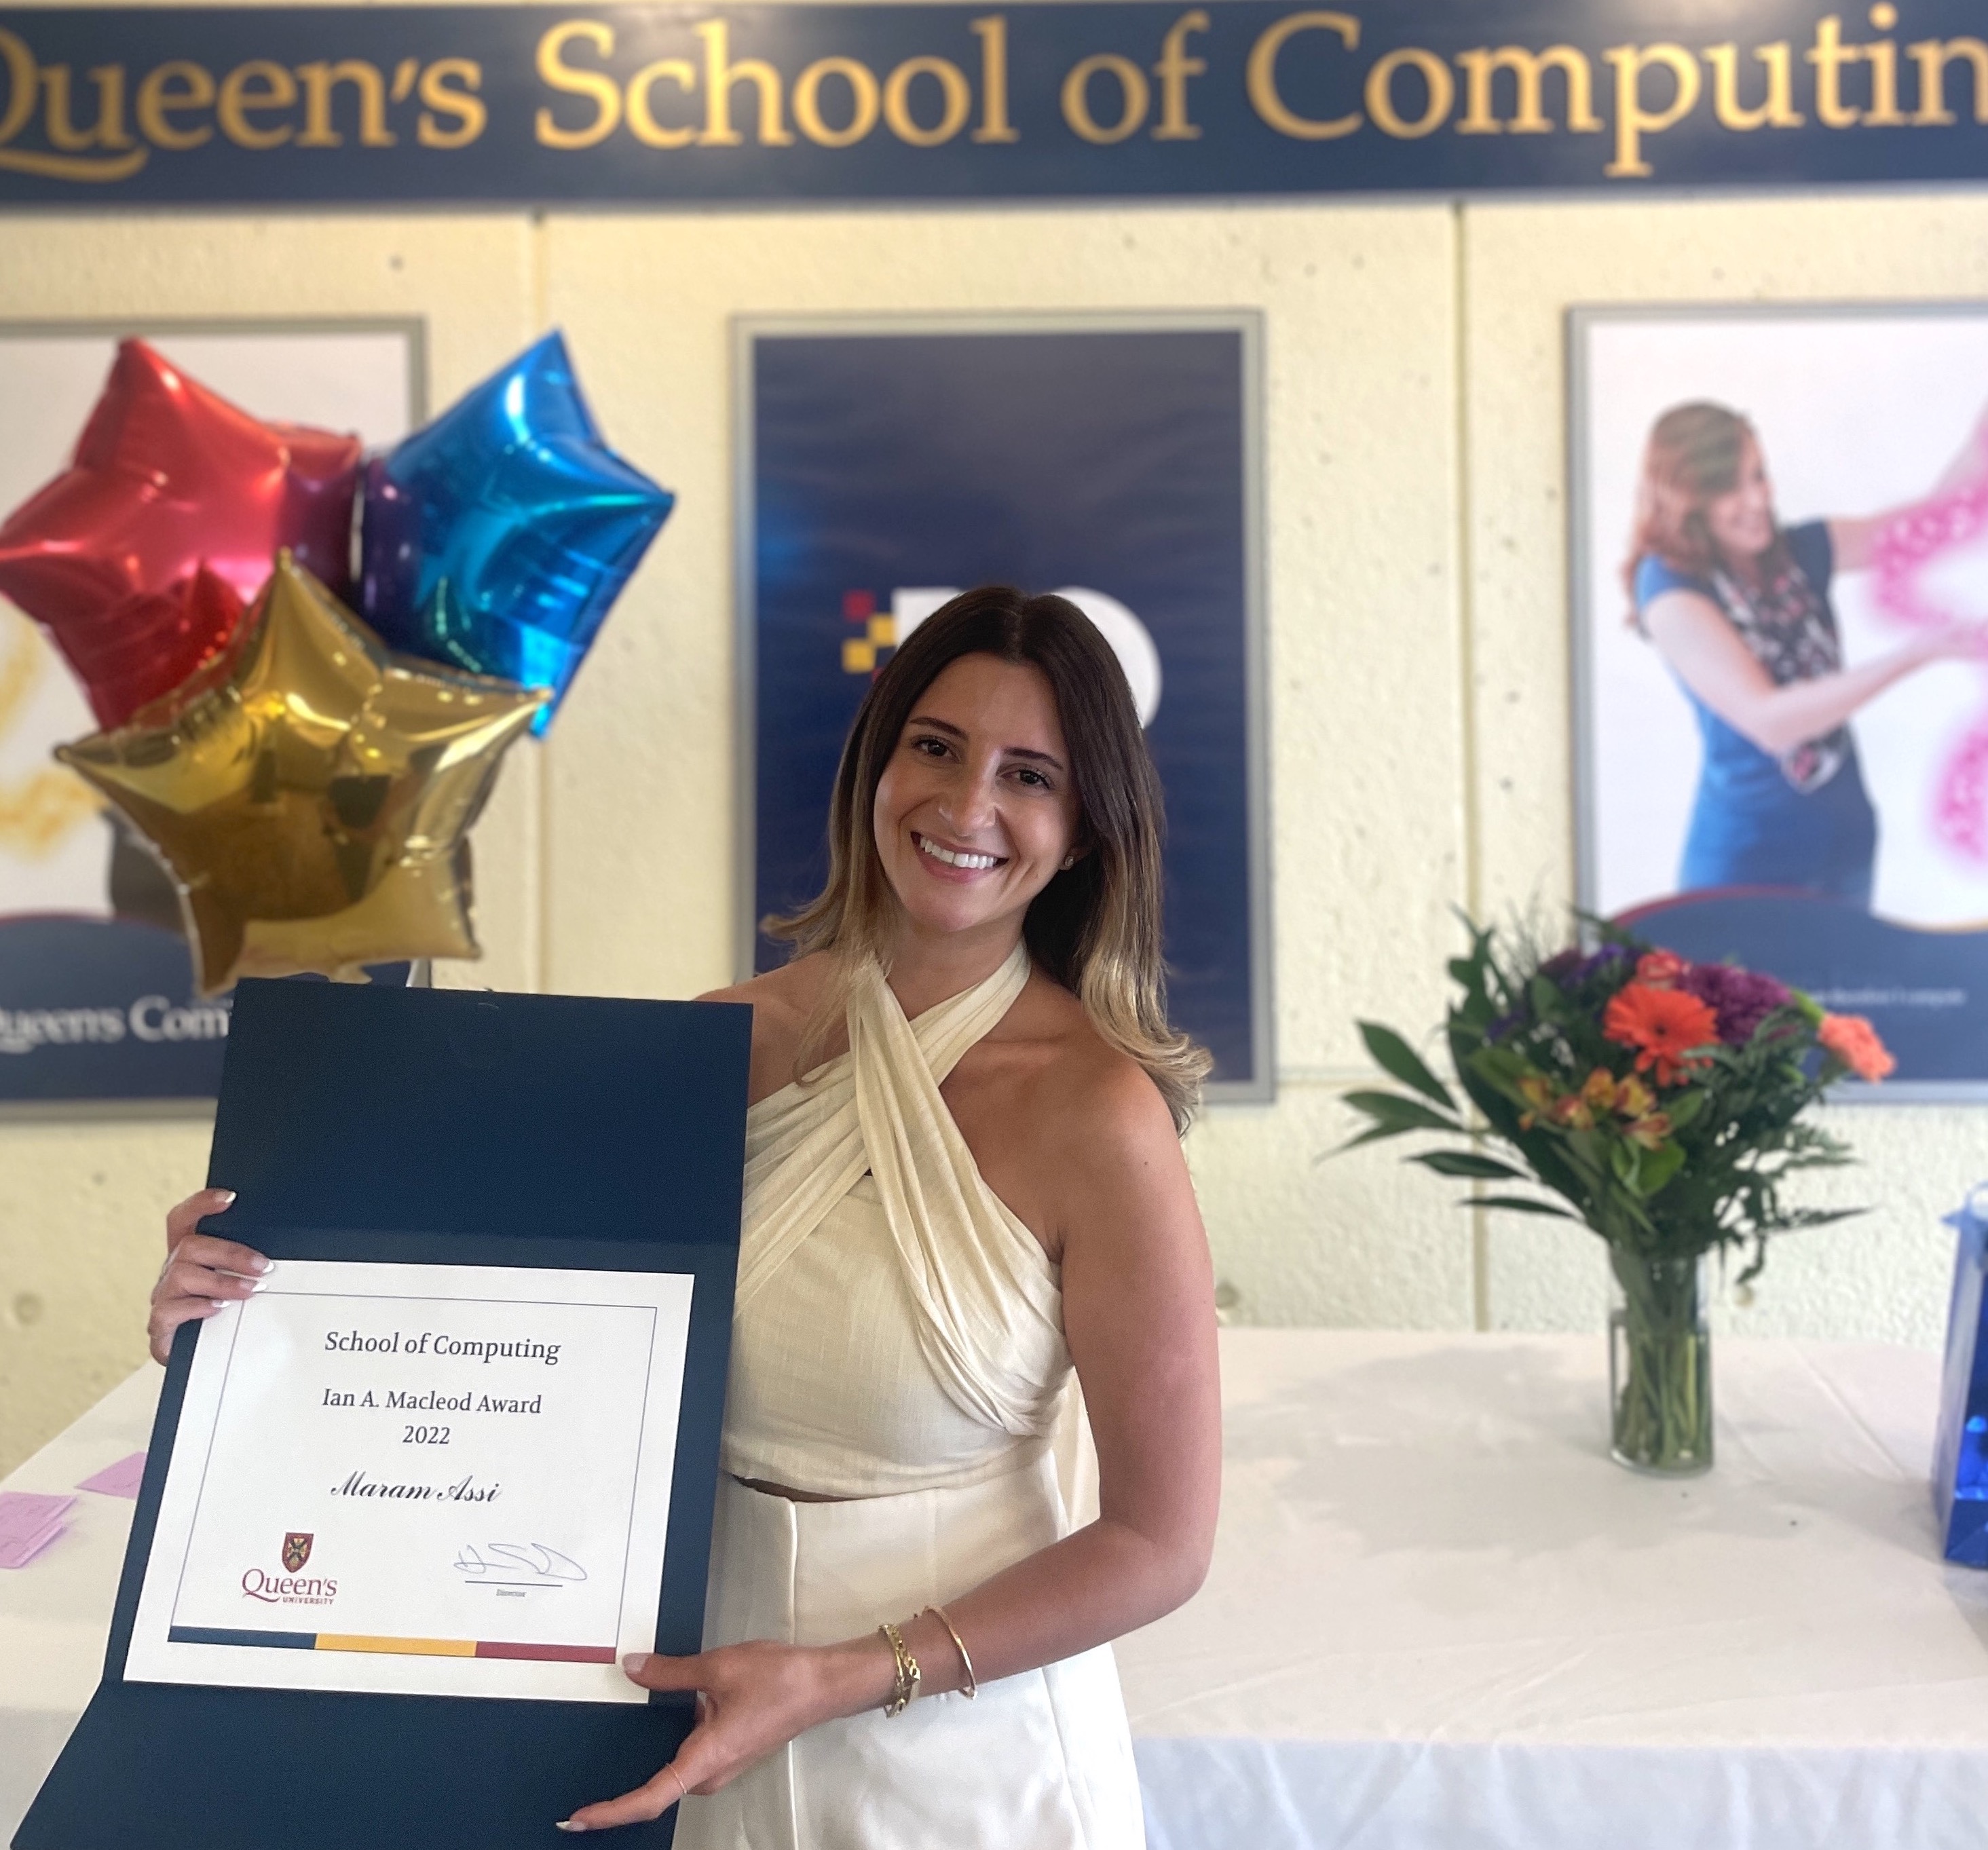 Maram Assi winning the Ian School of Computing award